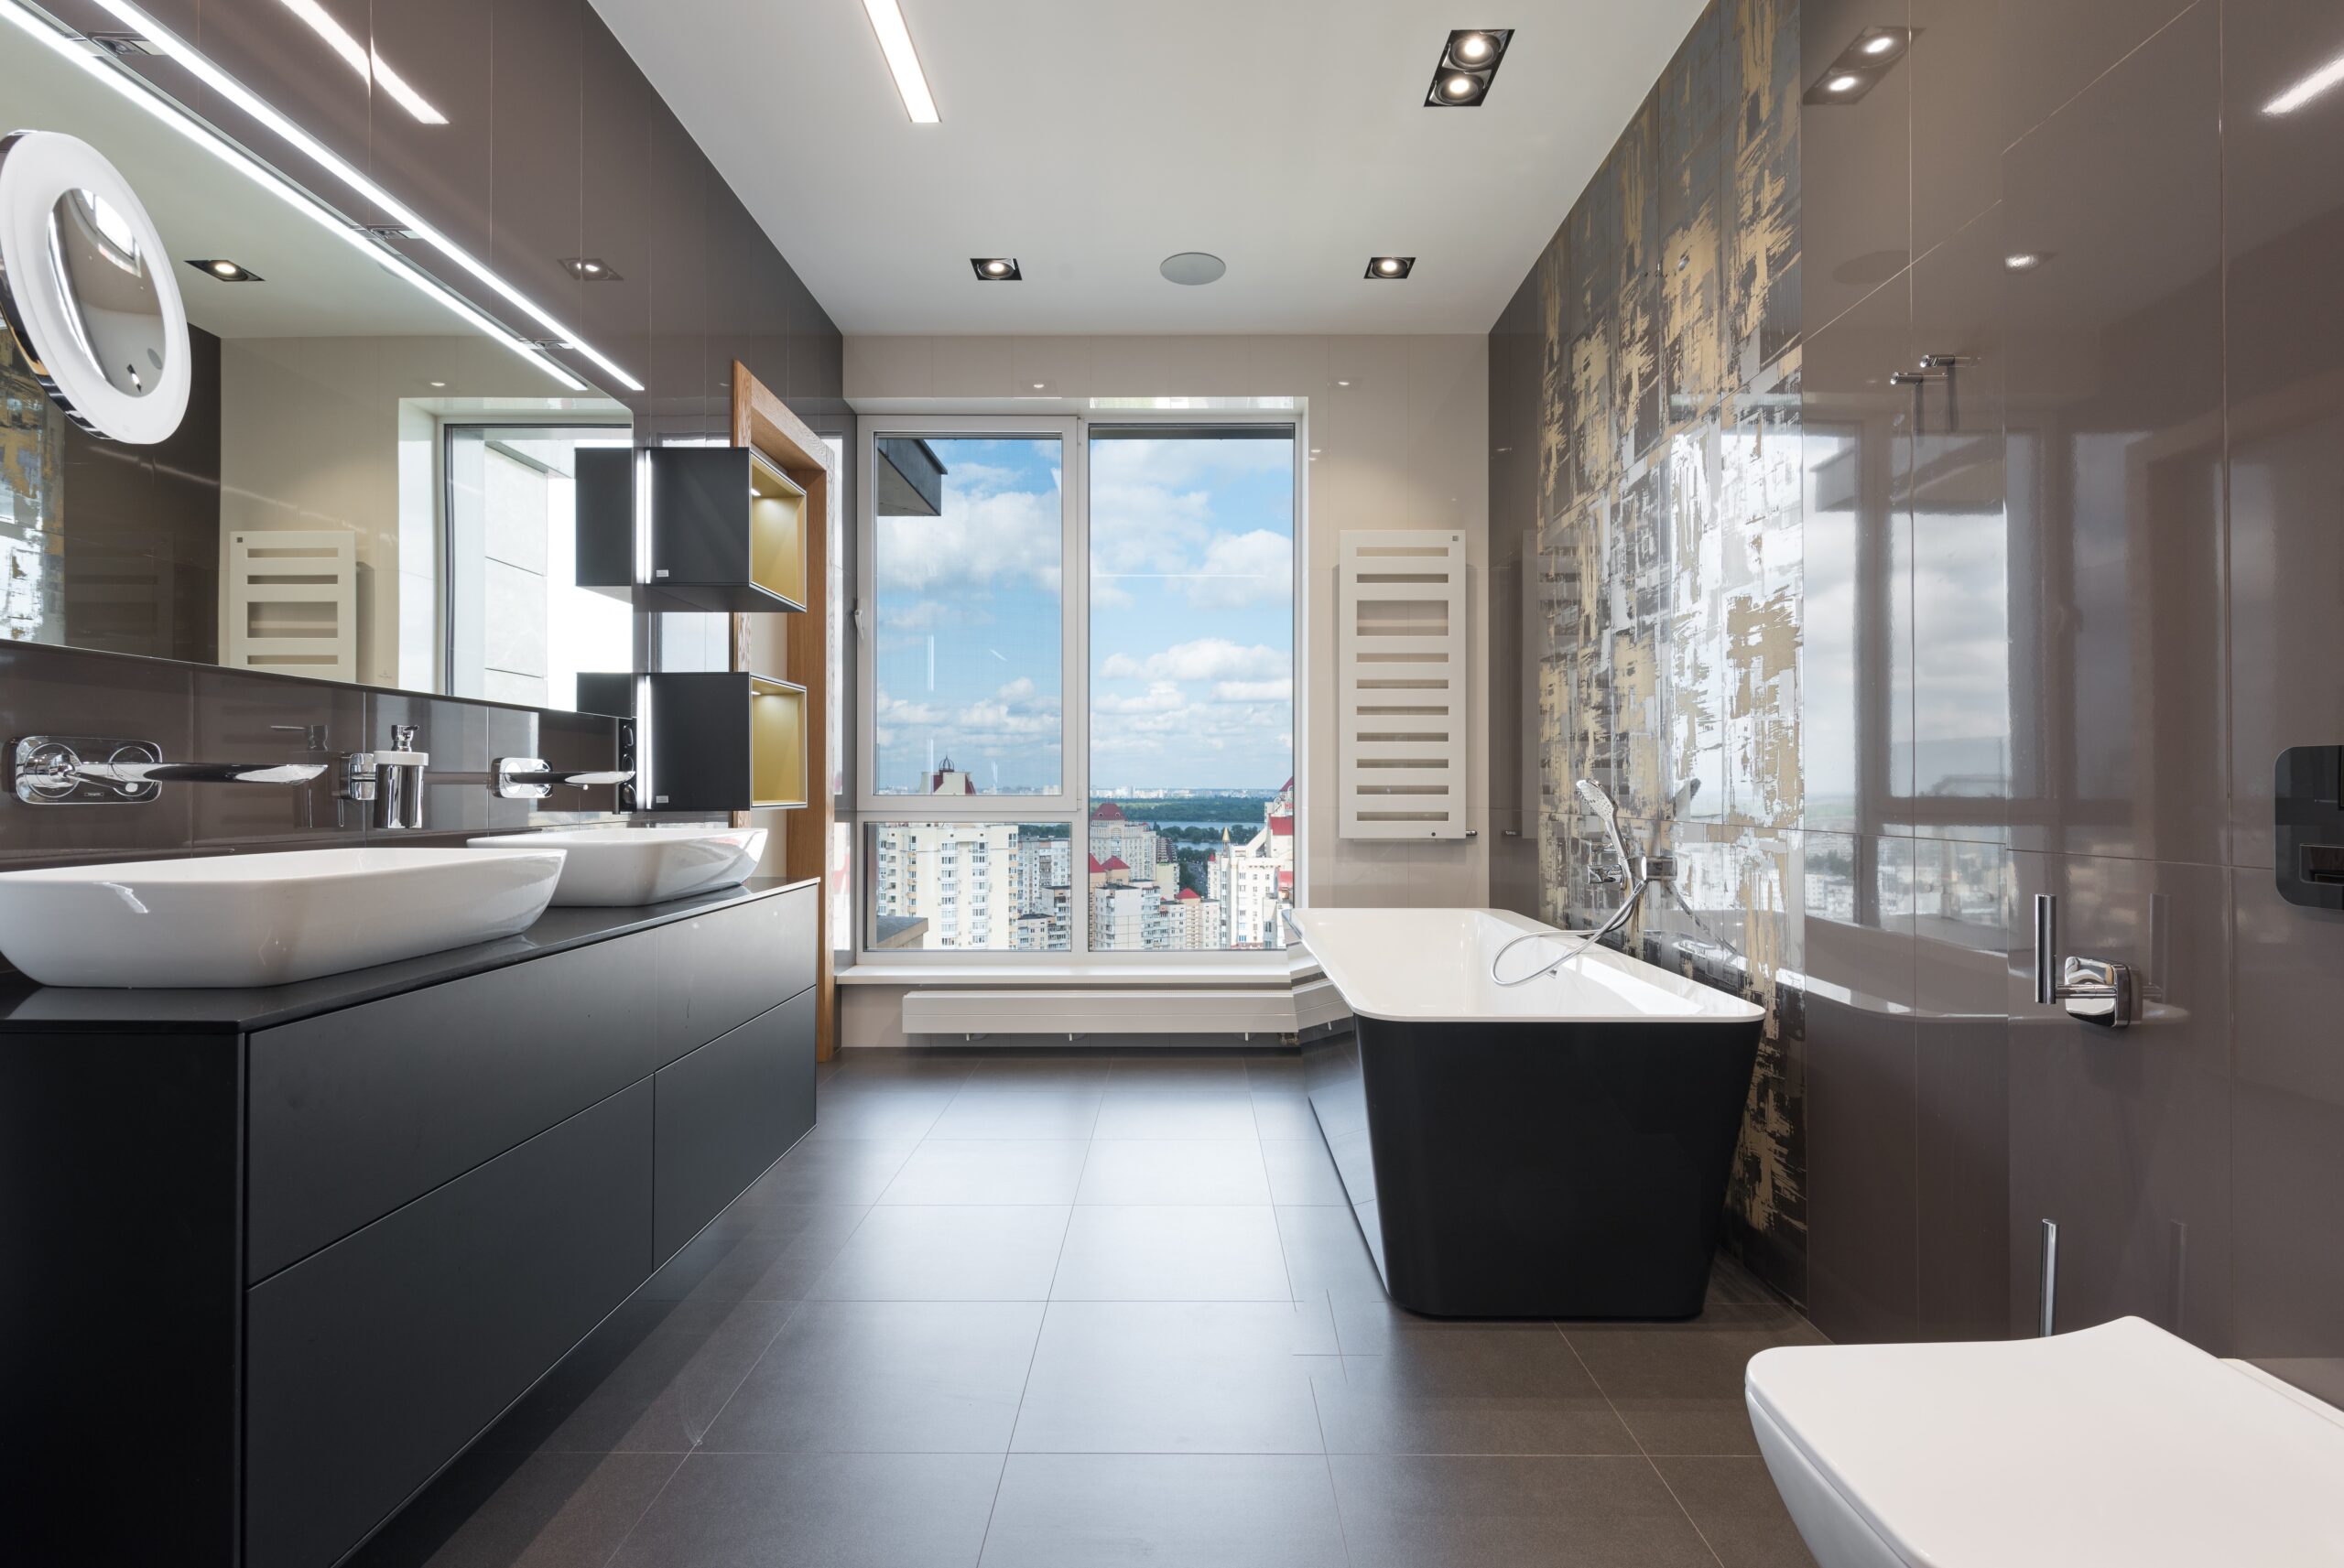 Luxurious Bathroom Upgrades